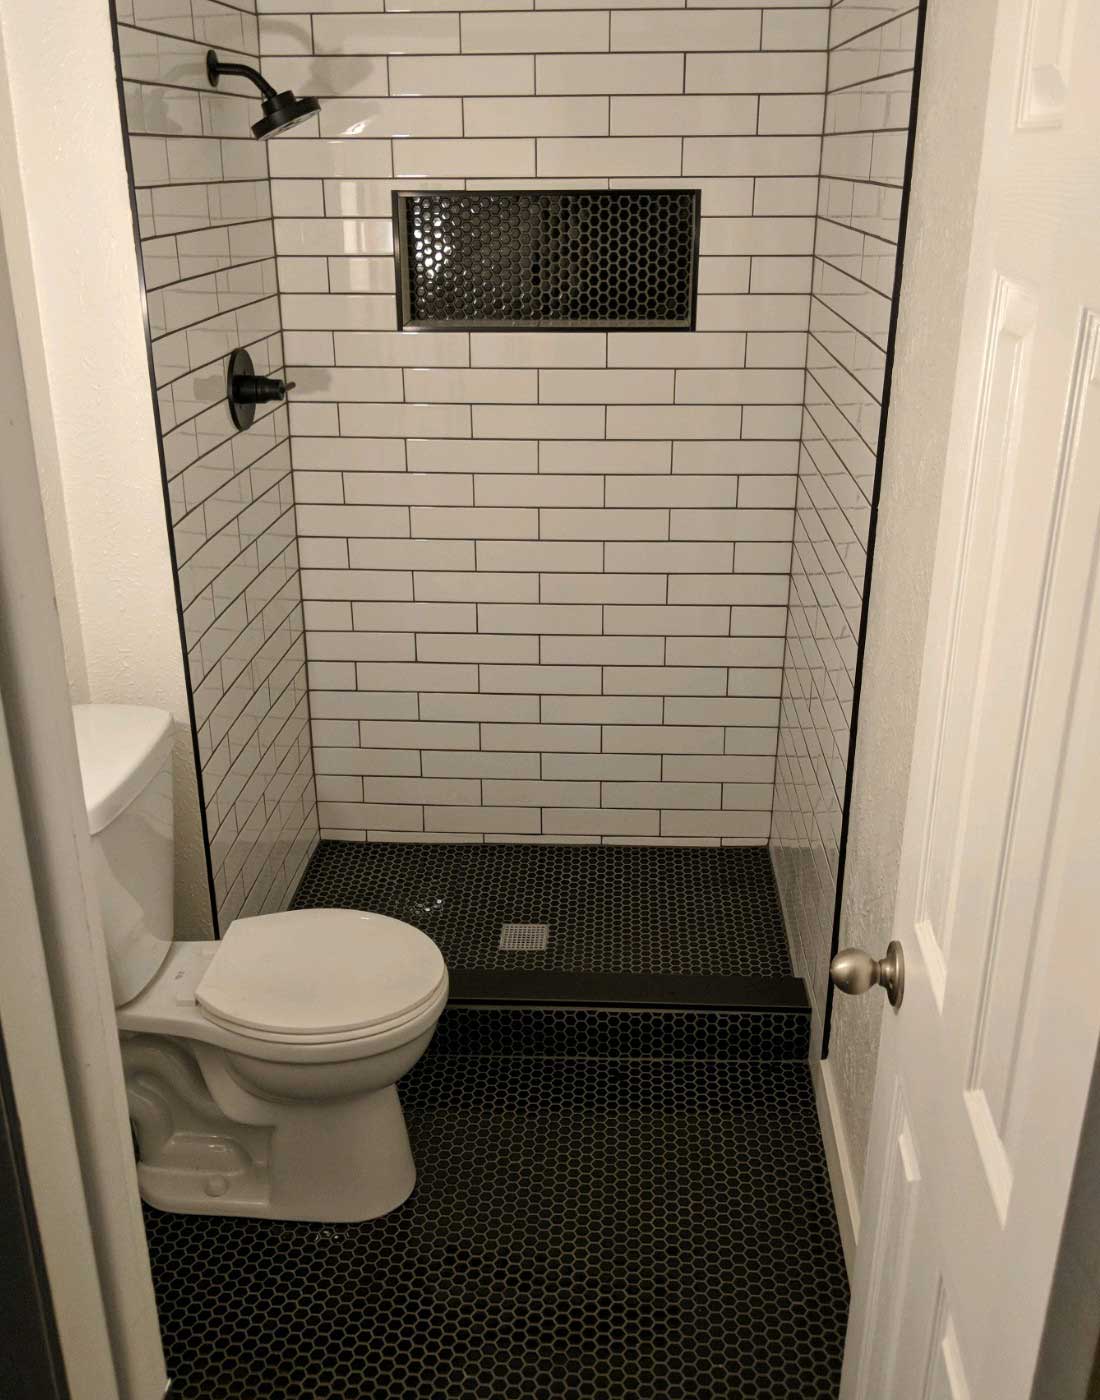 Newely remodeled bathroom